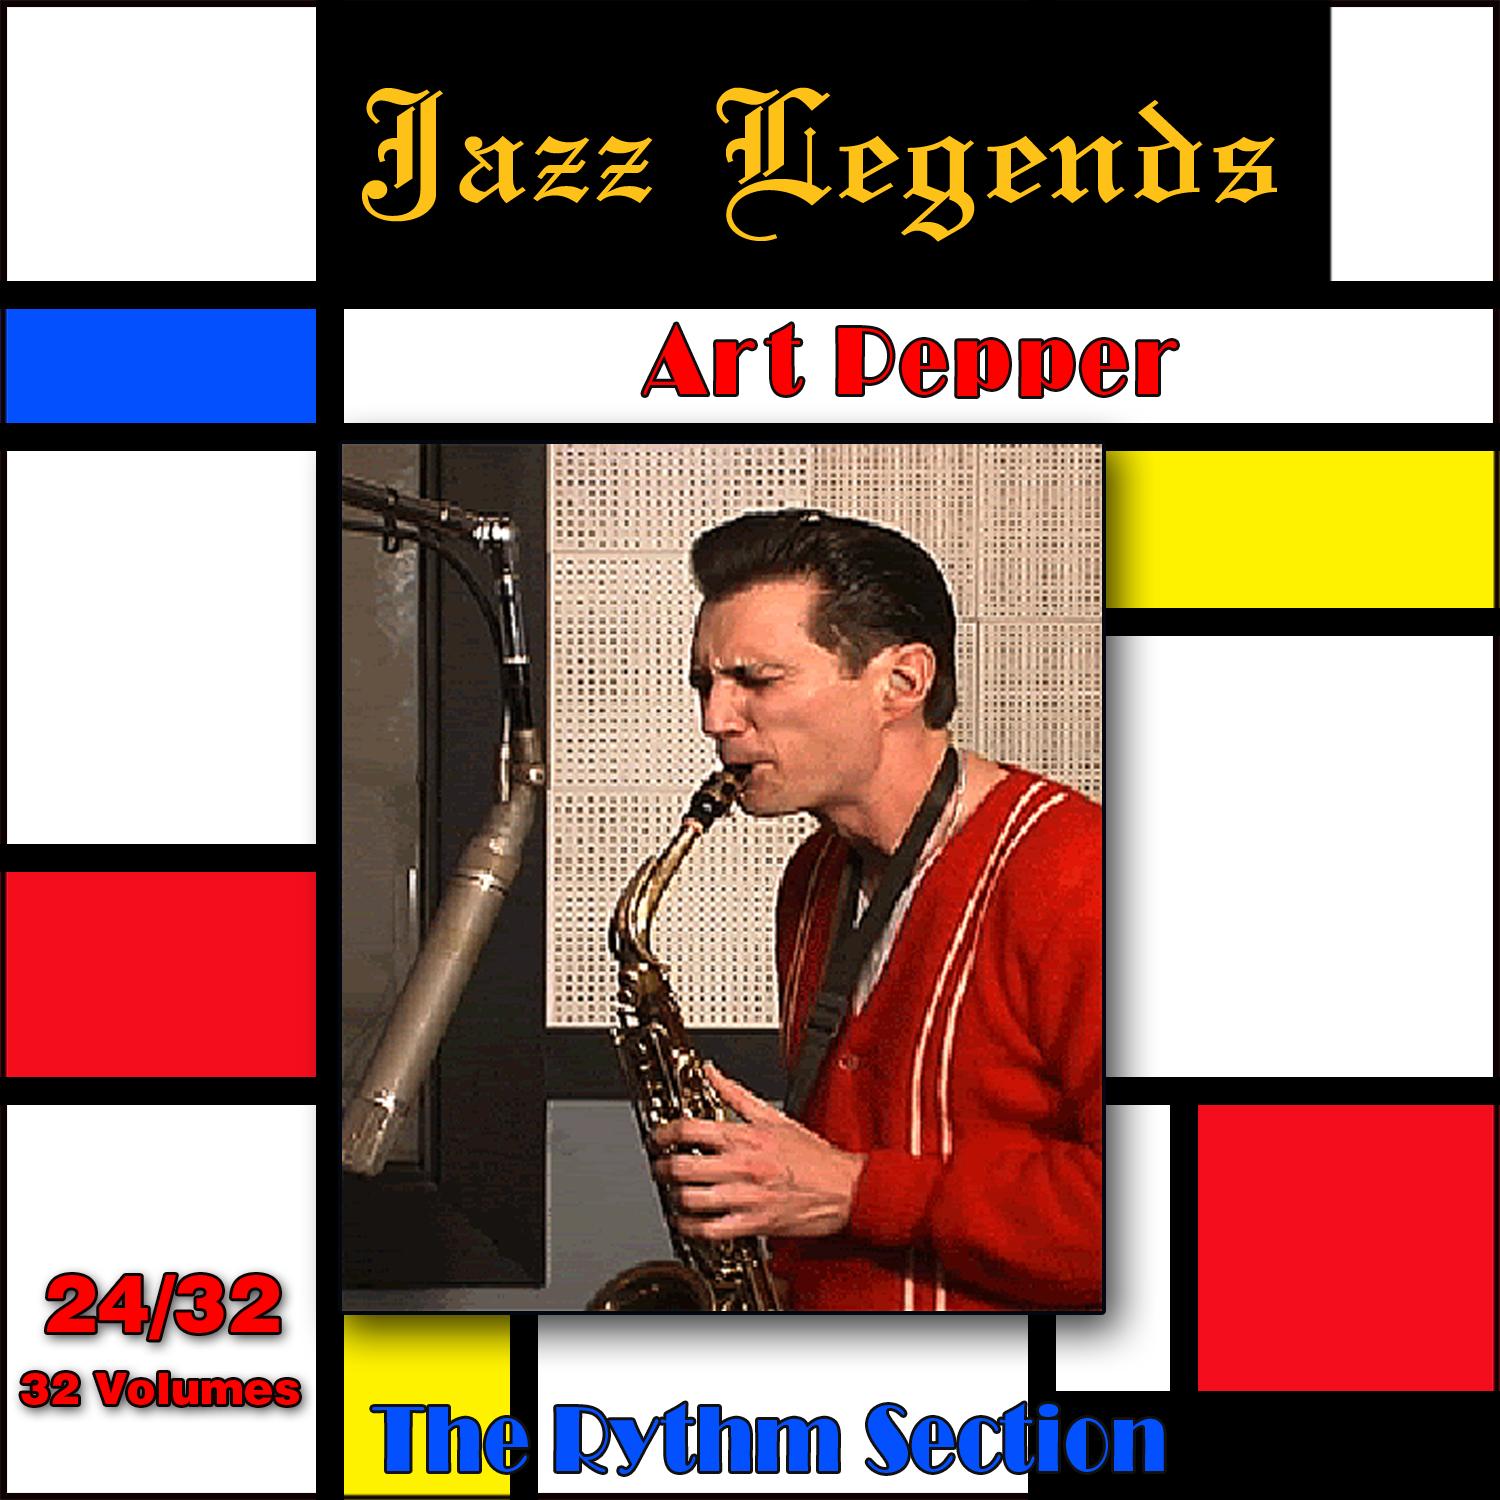 Jazz Legends Le gendes du Jazz, Vol. 24 32: Art Pepper  The Rhythm Section